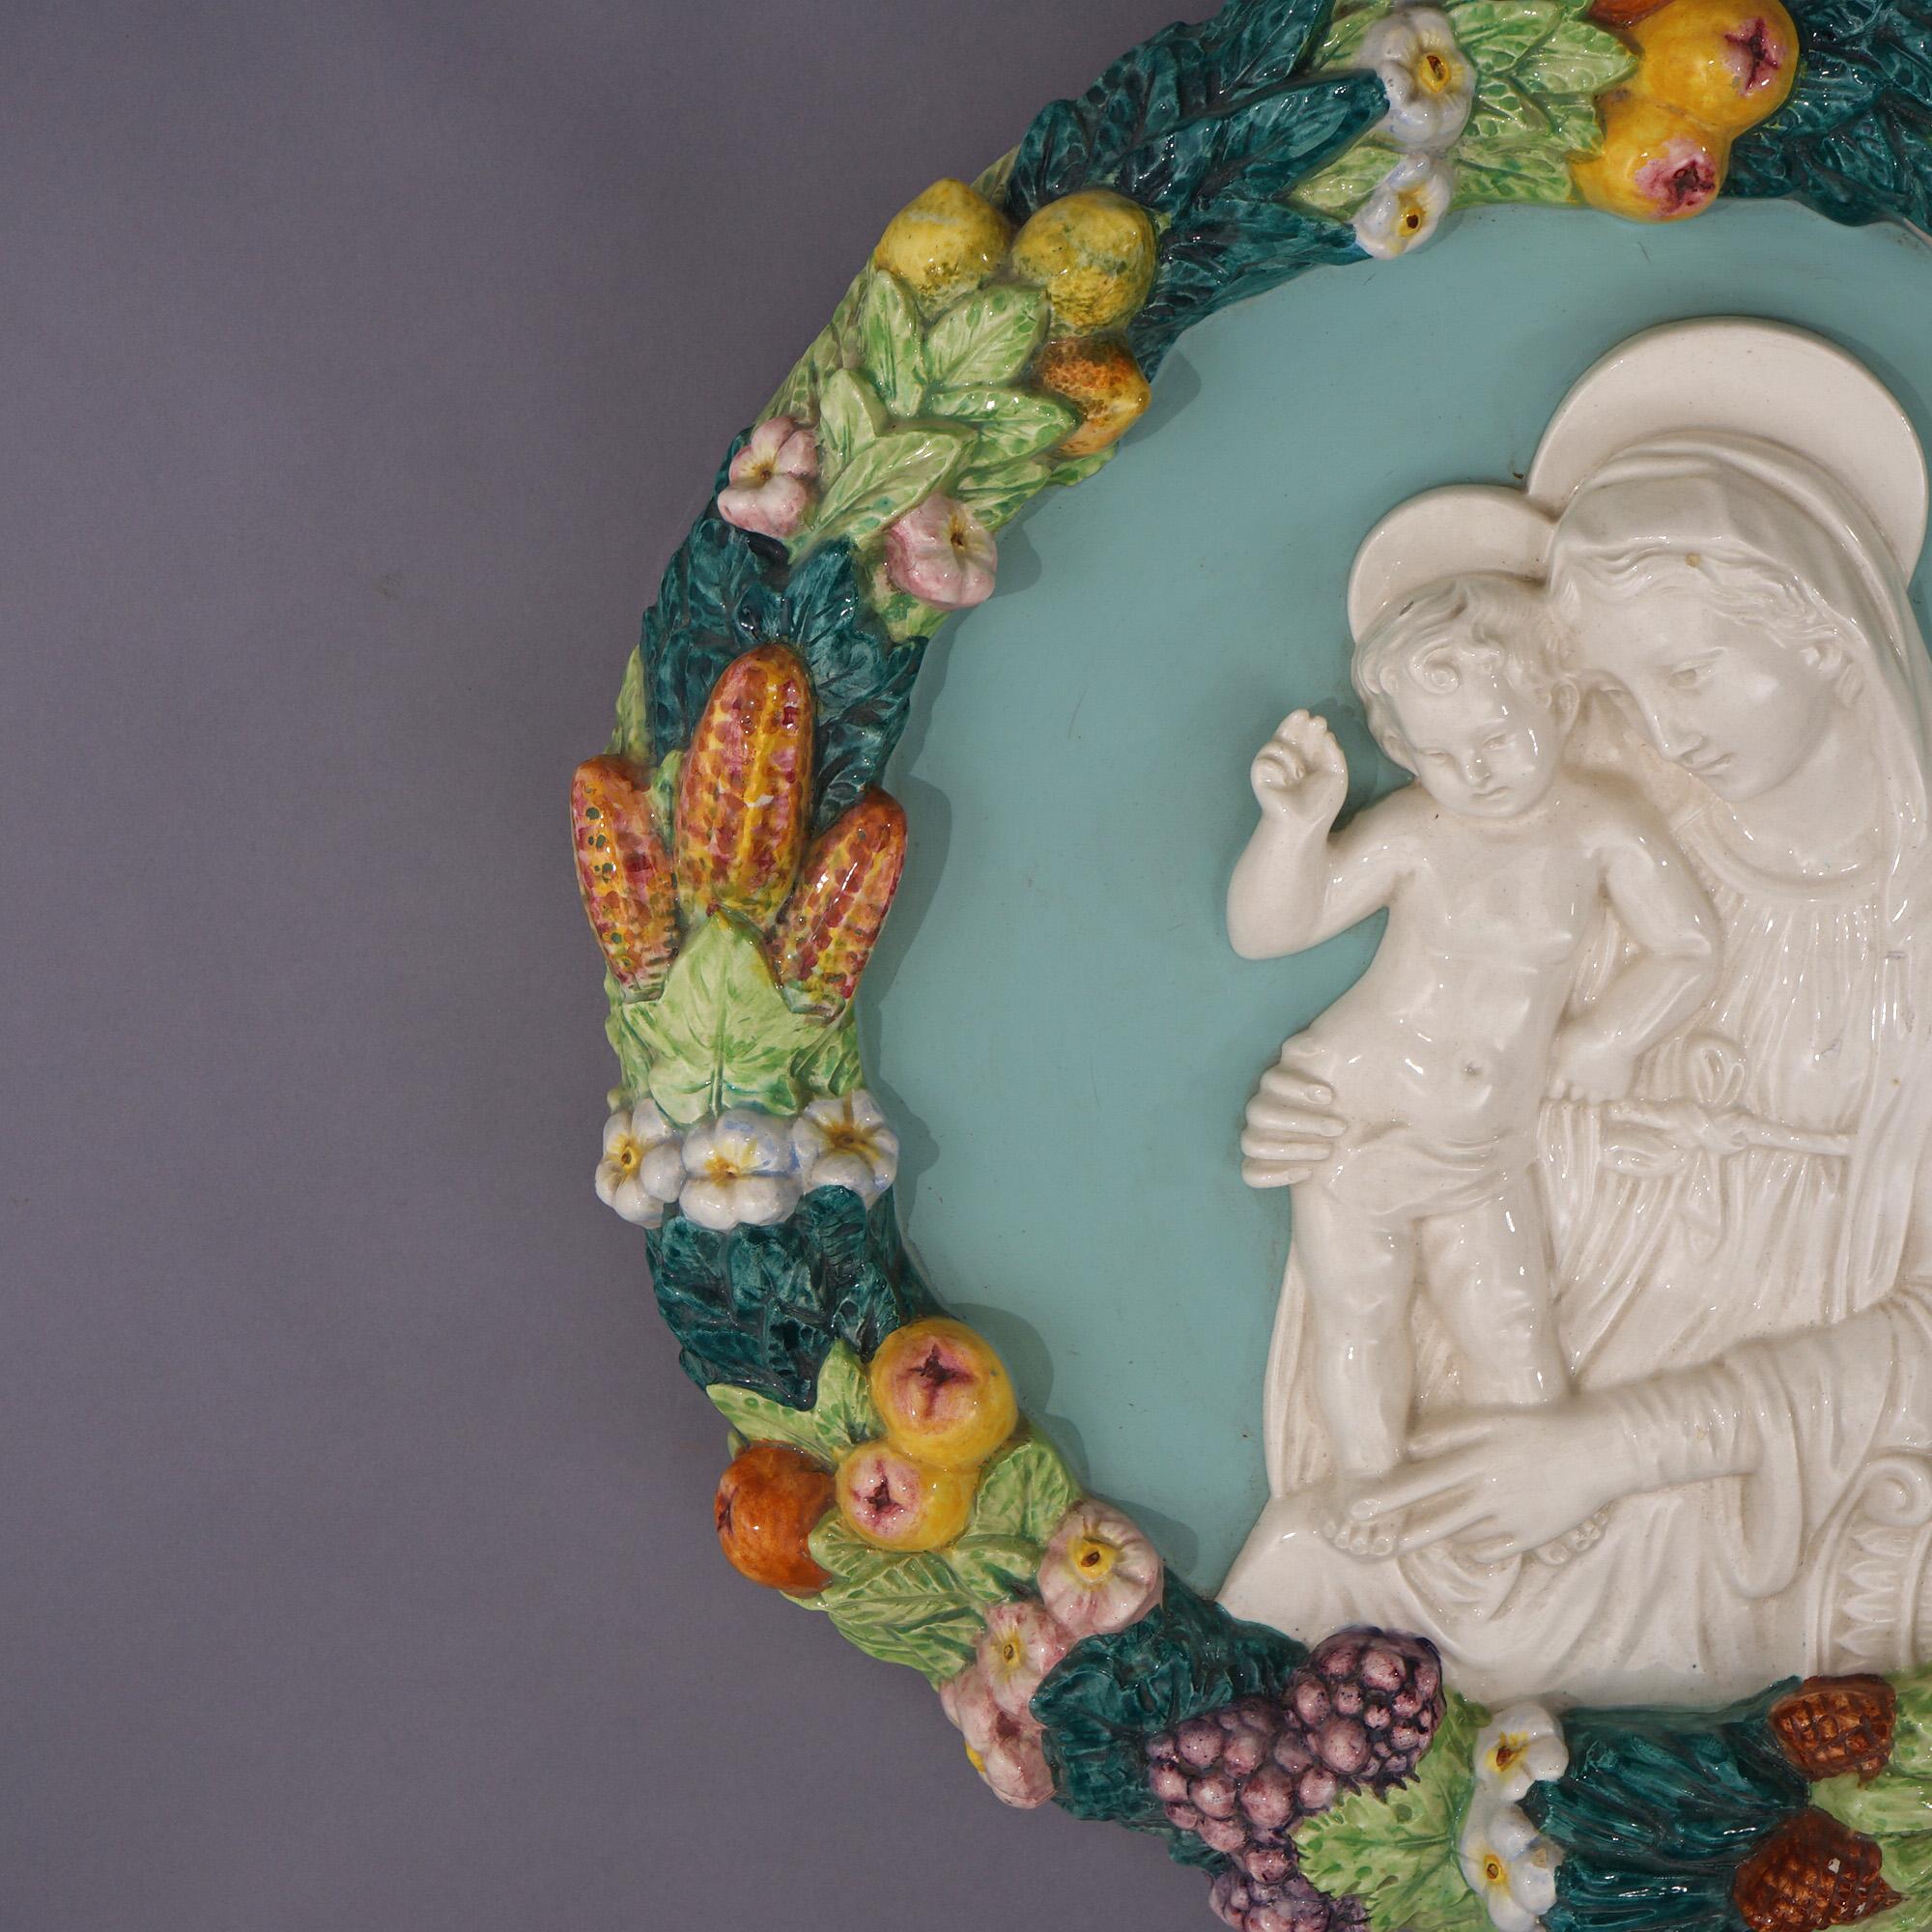 20th Century Italian Della Robin Pottery Plaque of Mary & Child with Fruit Wreath 20th C